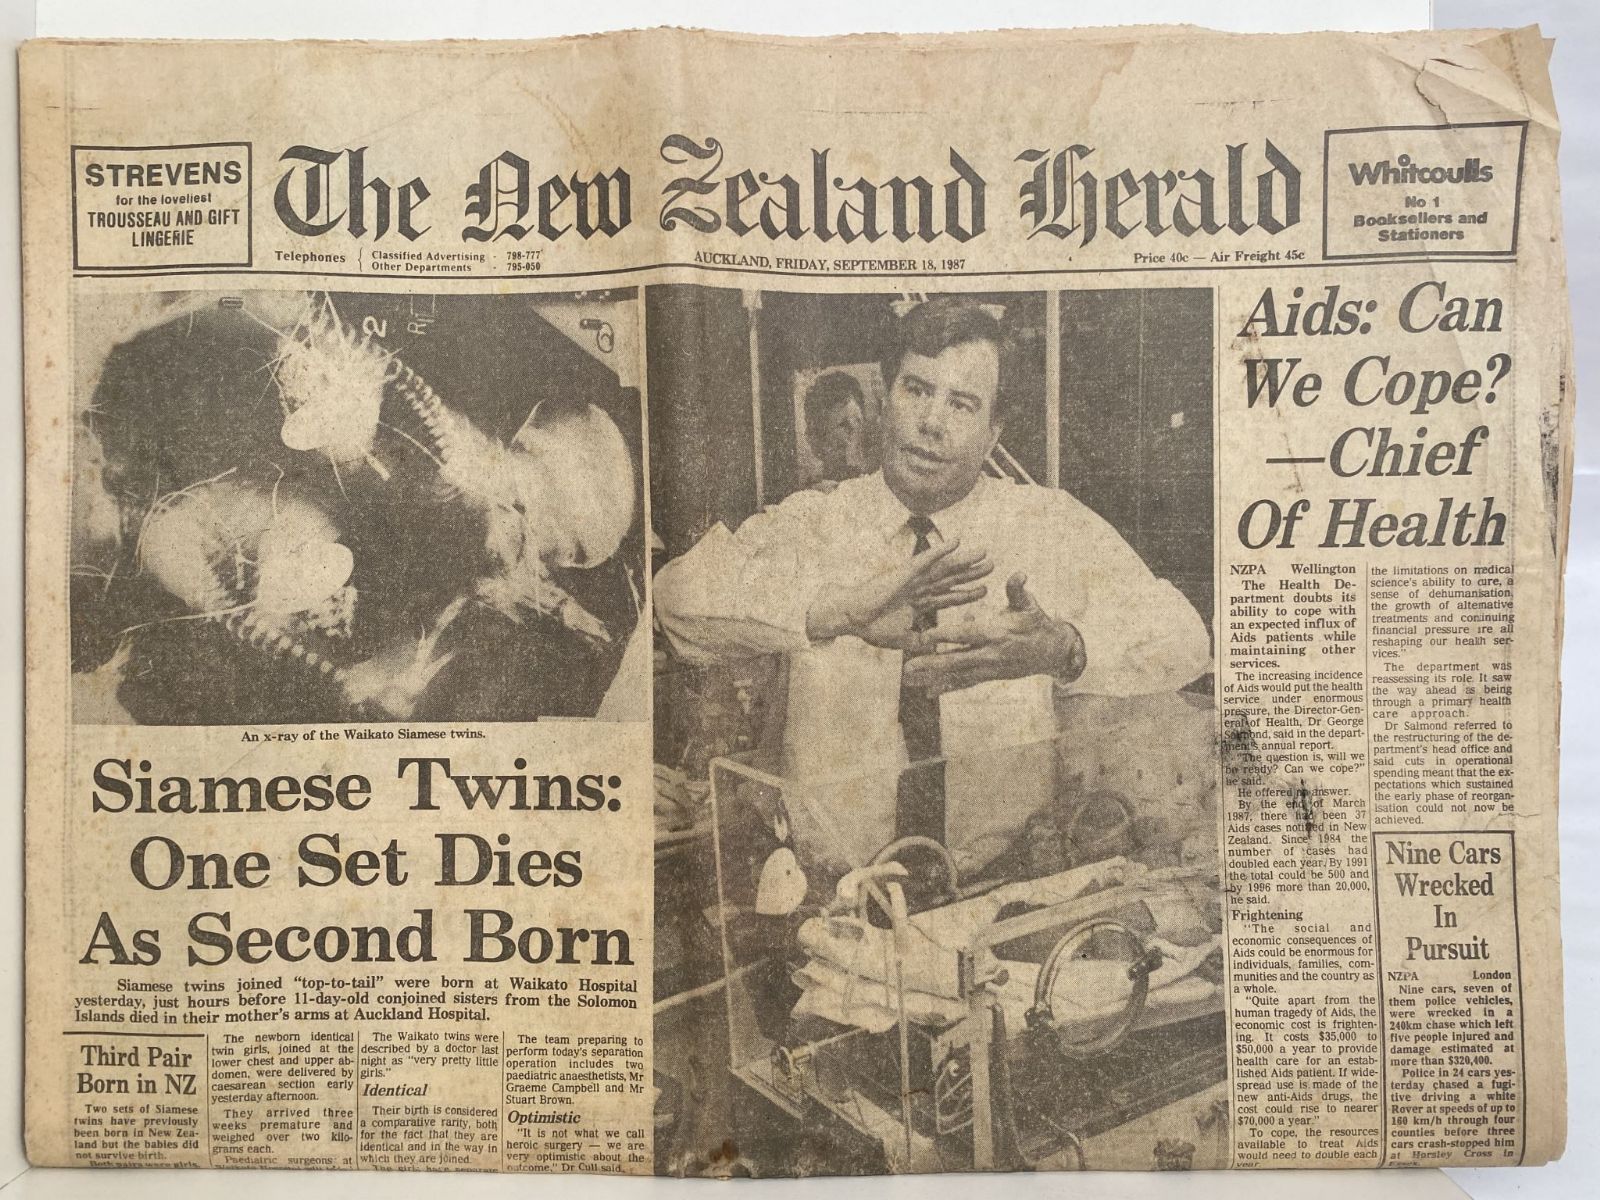 OLD NEWSPAPER: The New Zealand Herald, 18 September 1987